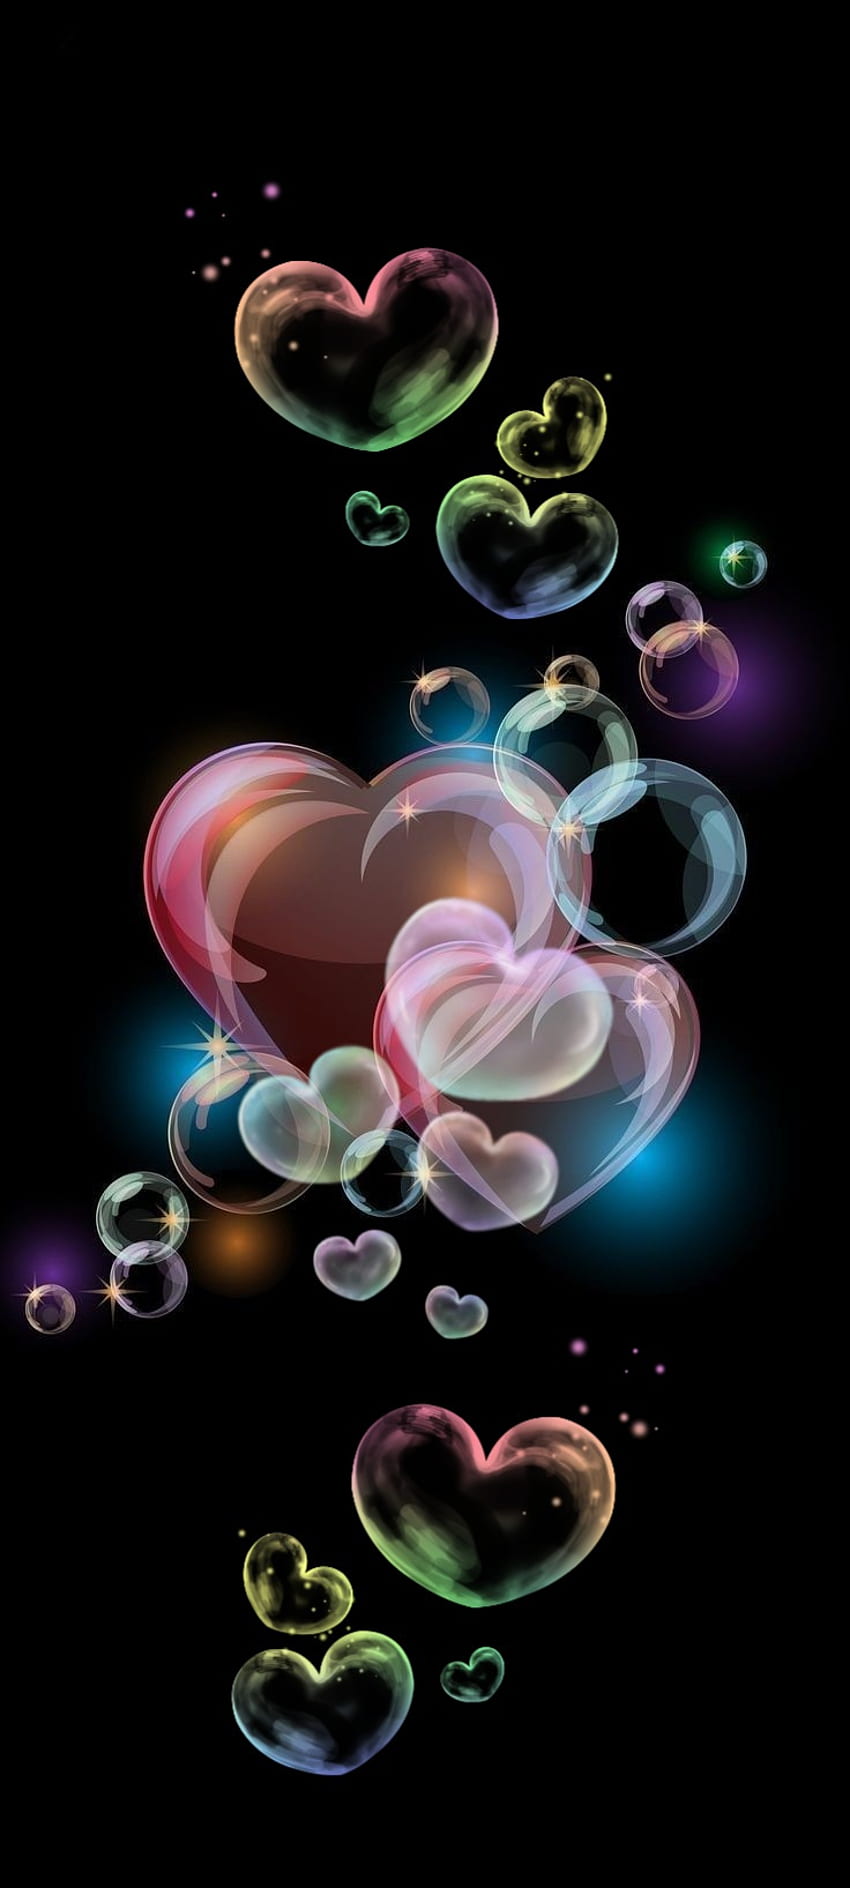 Bubbles Wallpaper Pictures  Download Free Images on Unsplash